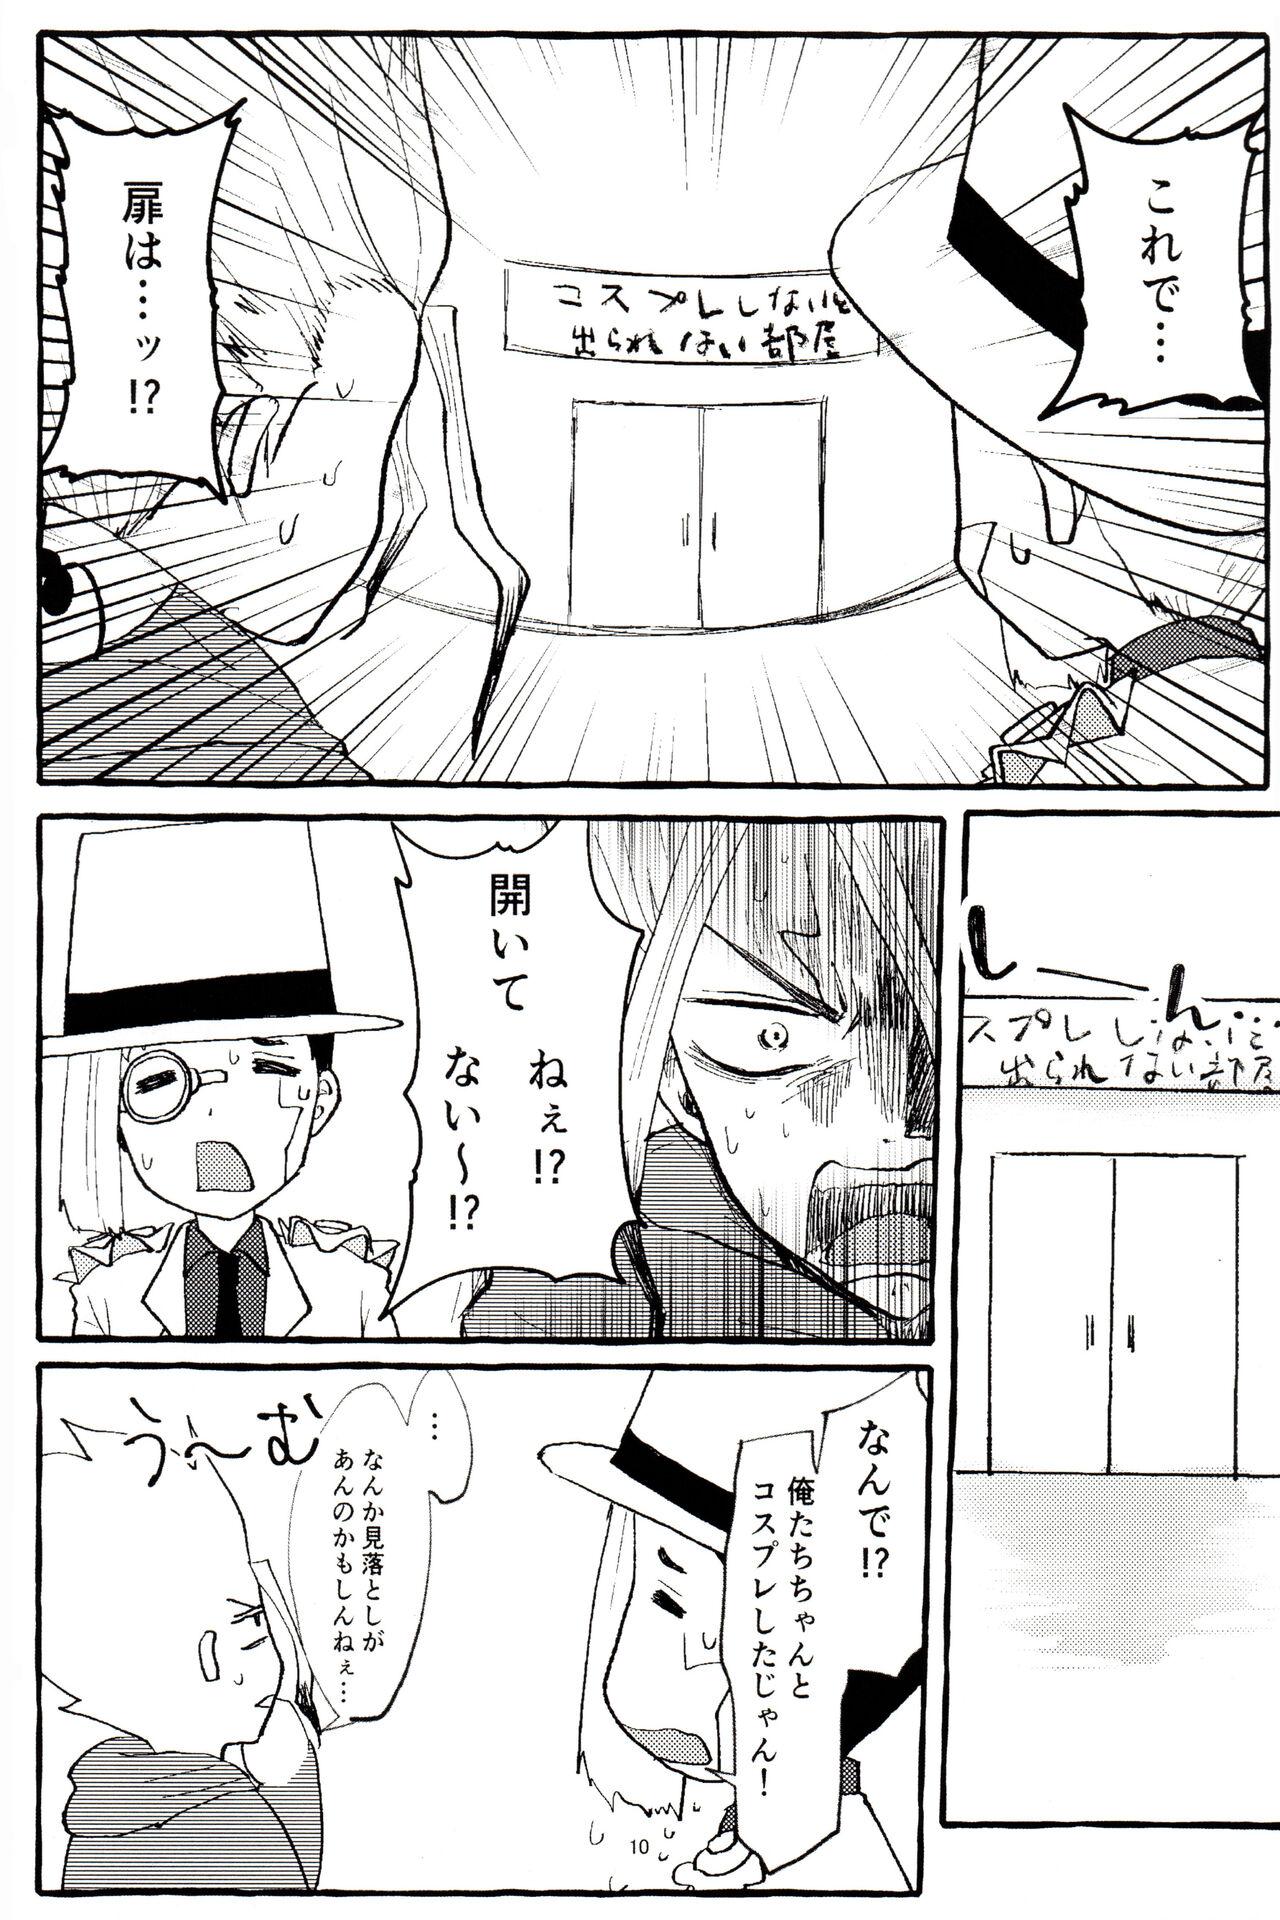 Chubby ××× Shinai to de rarenai heya - Dr. stone Cdmx - Page 10